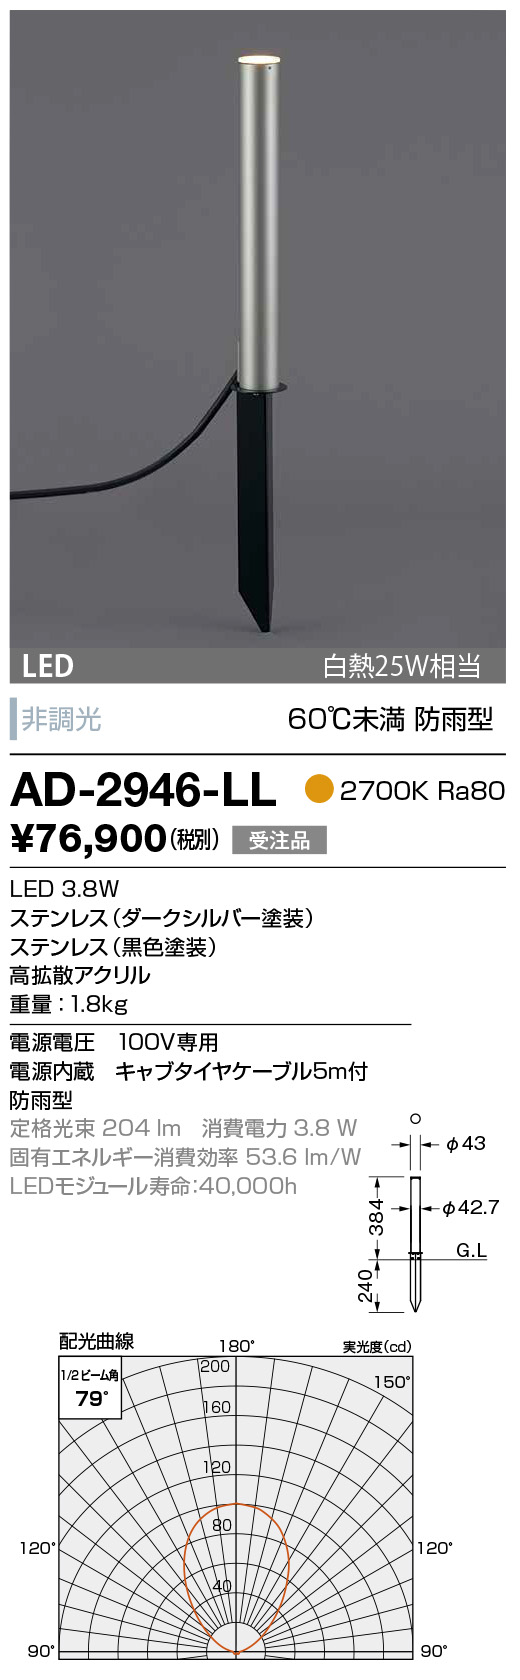 AD-2946-LL(山田照明) 商品詳細 ～ 照明器具・換気扇他、電設資材販売のブライト